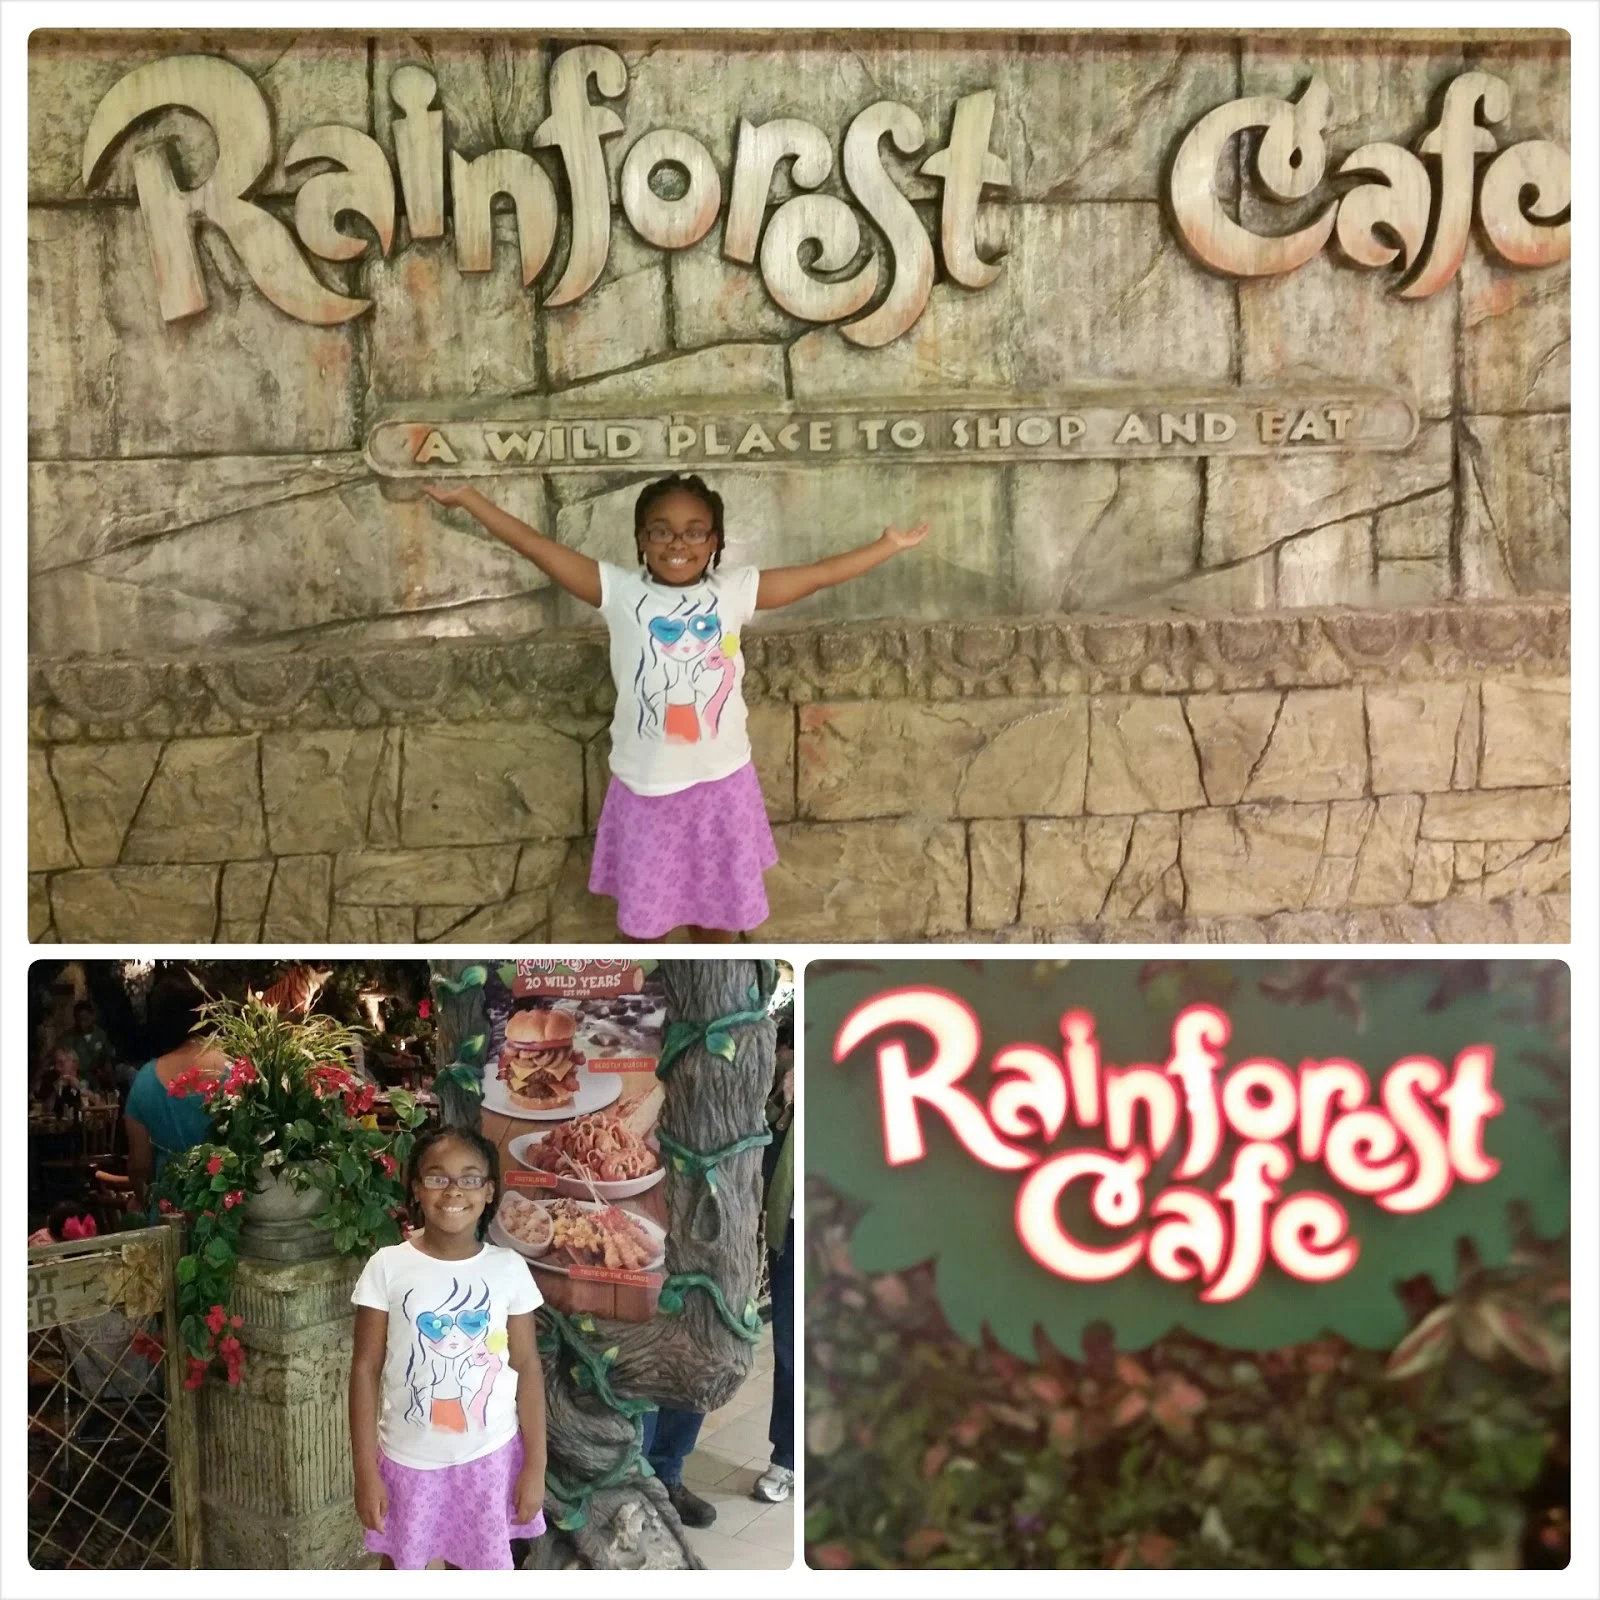 My Epic Family Road Trip Vacation! #RoadTrip #RainforestCafe via ProductReviewMom.com